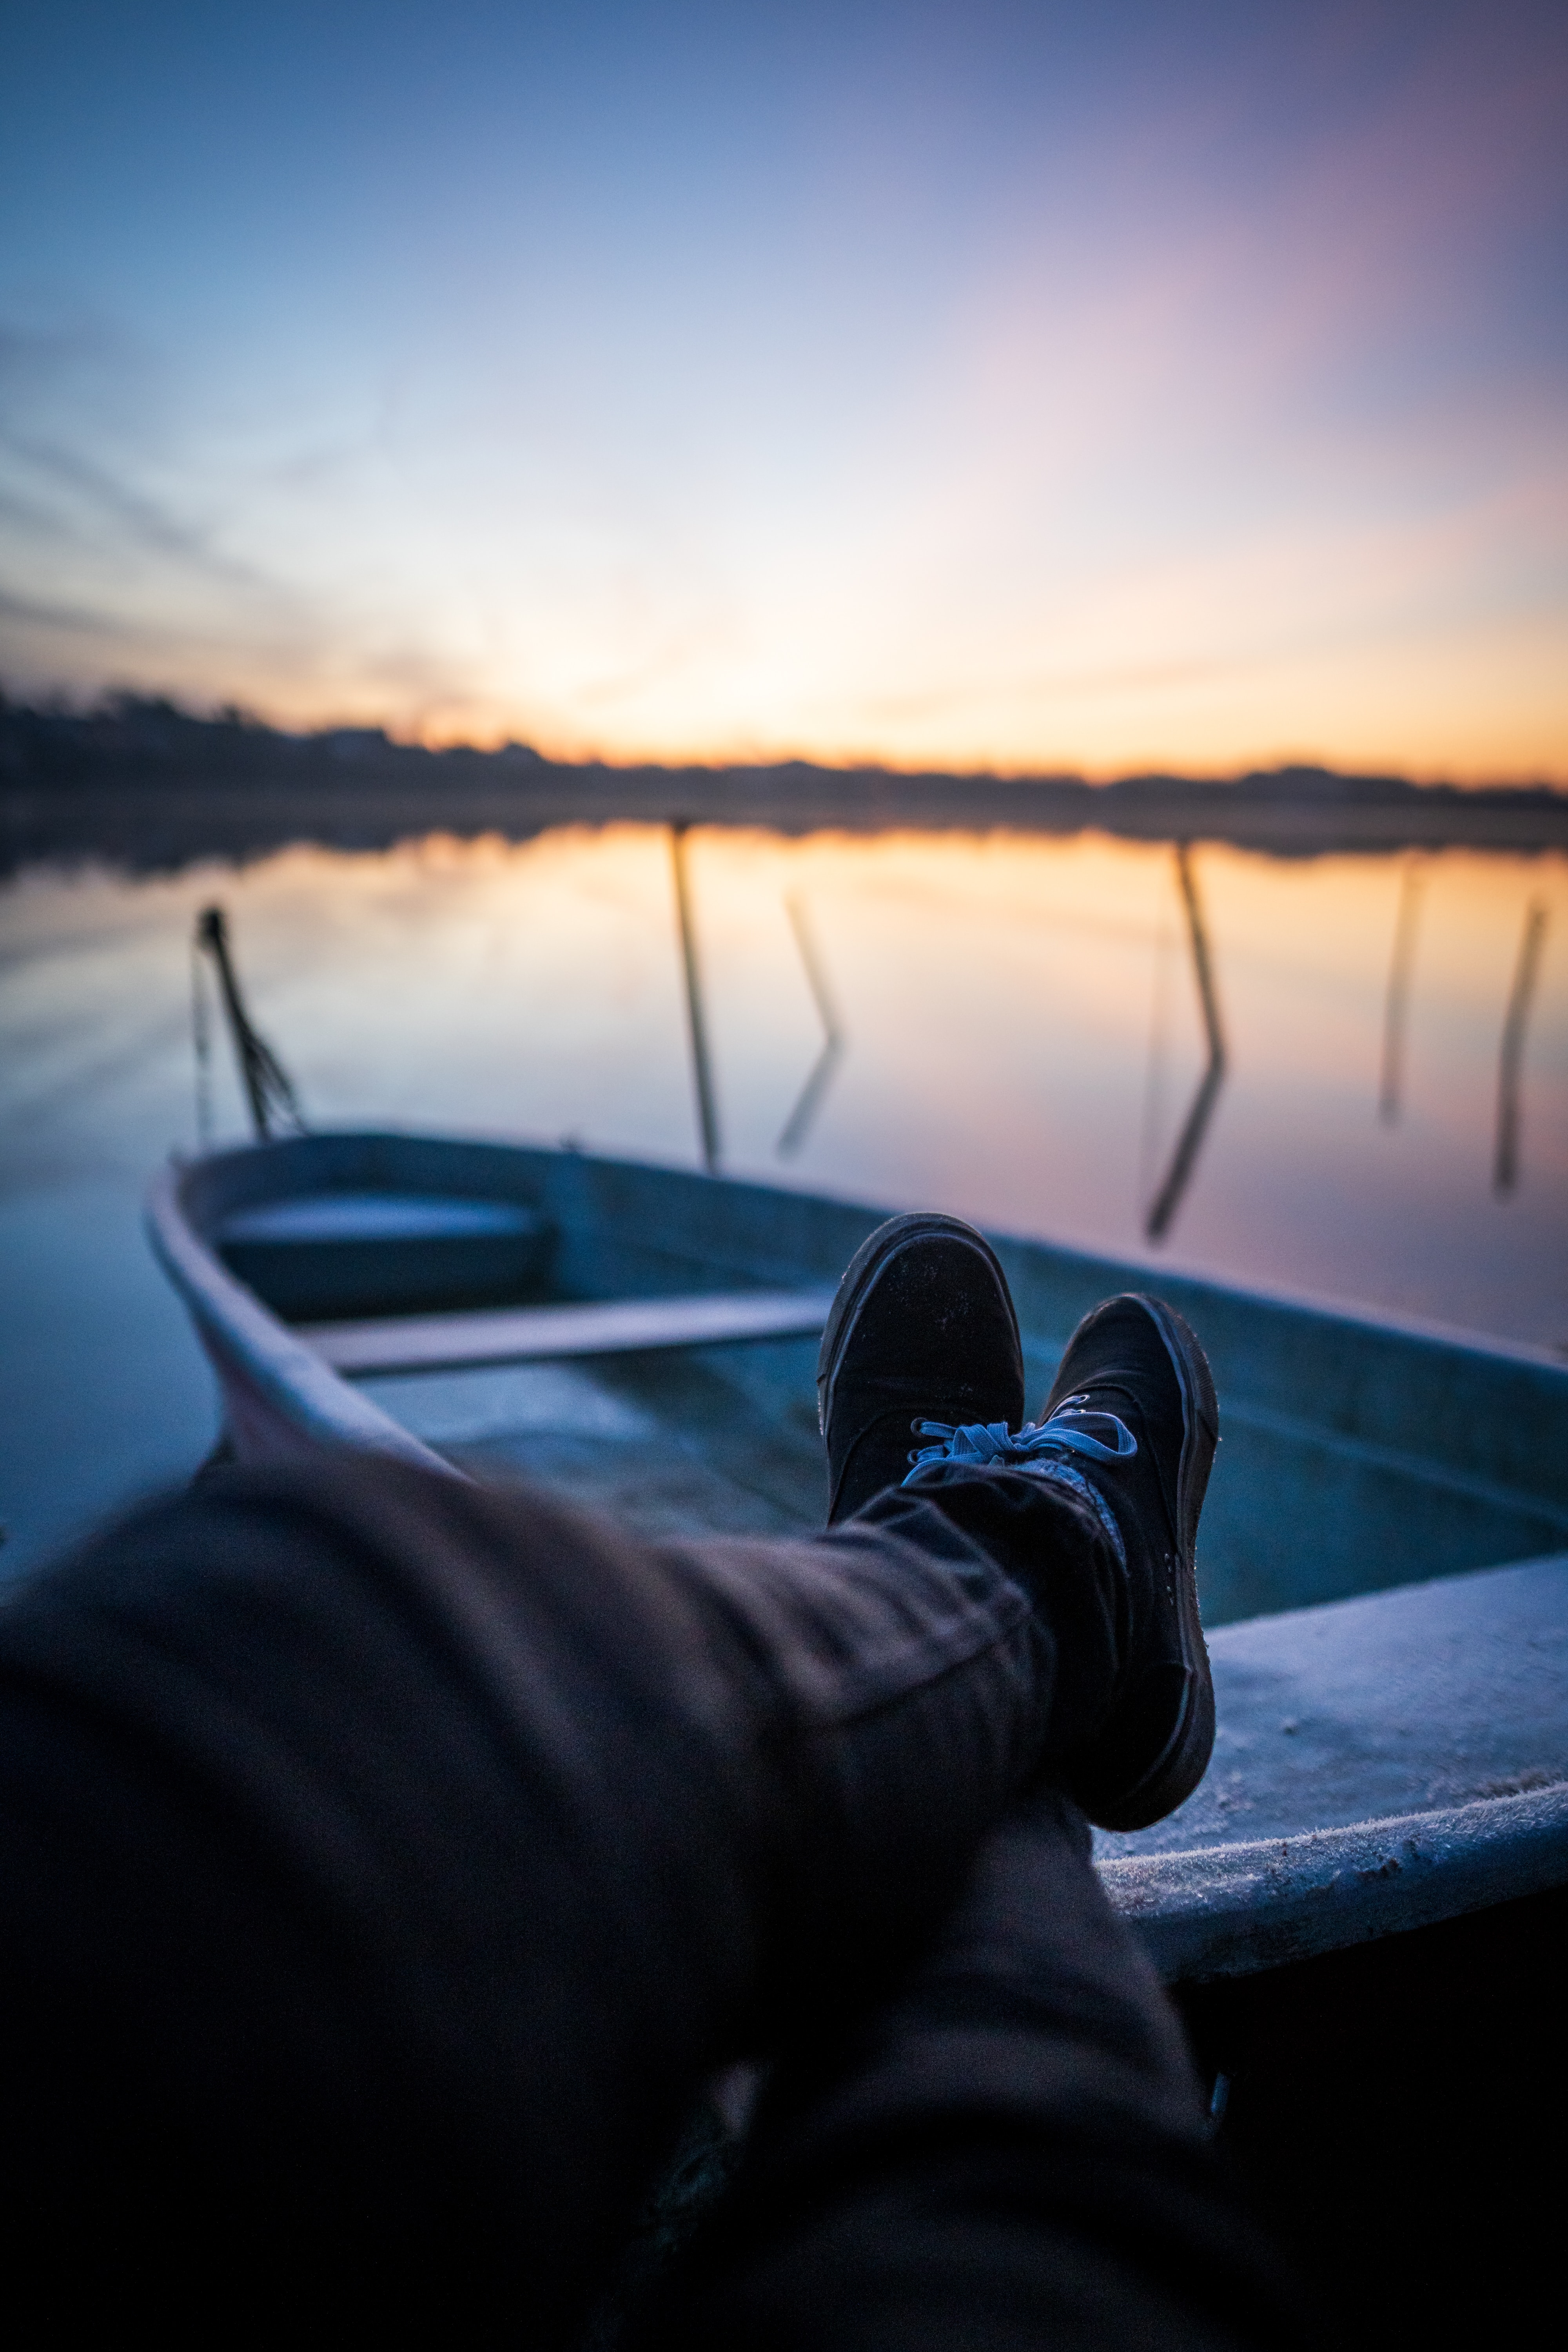 twilight, lake, miscellanea, miscellaneous, legs, dusk, relaxation, rest, boat